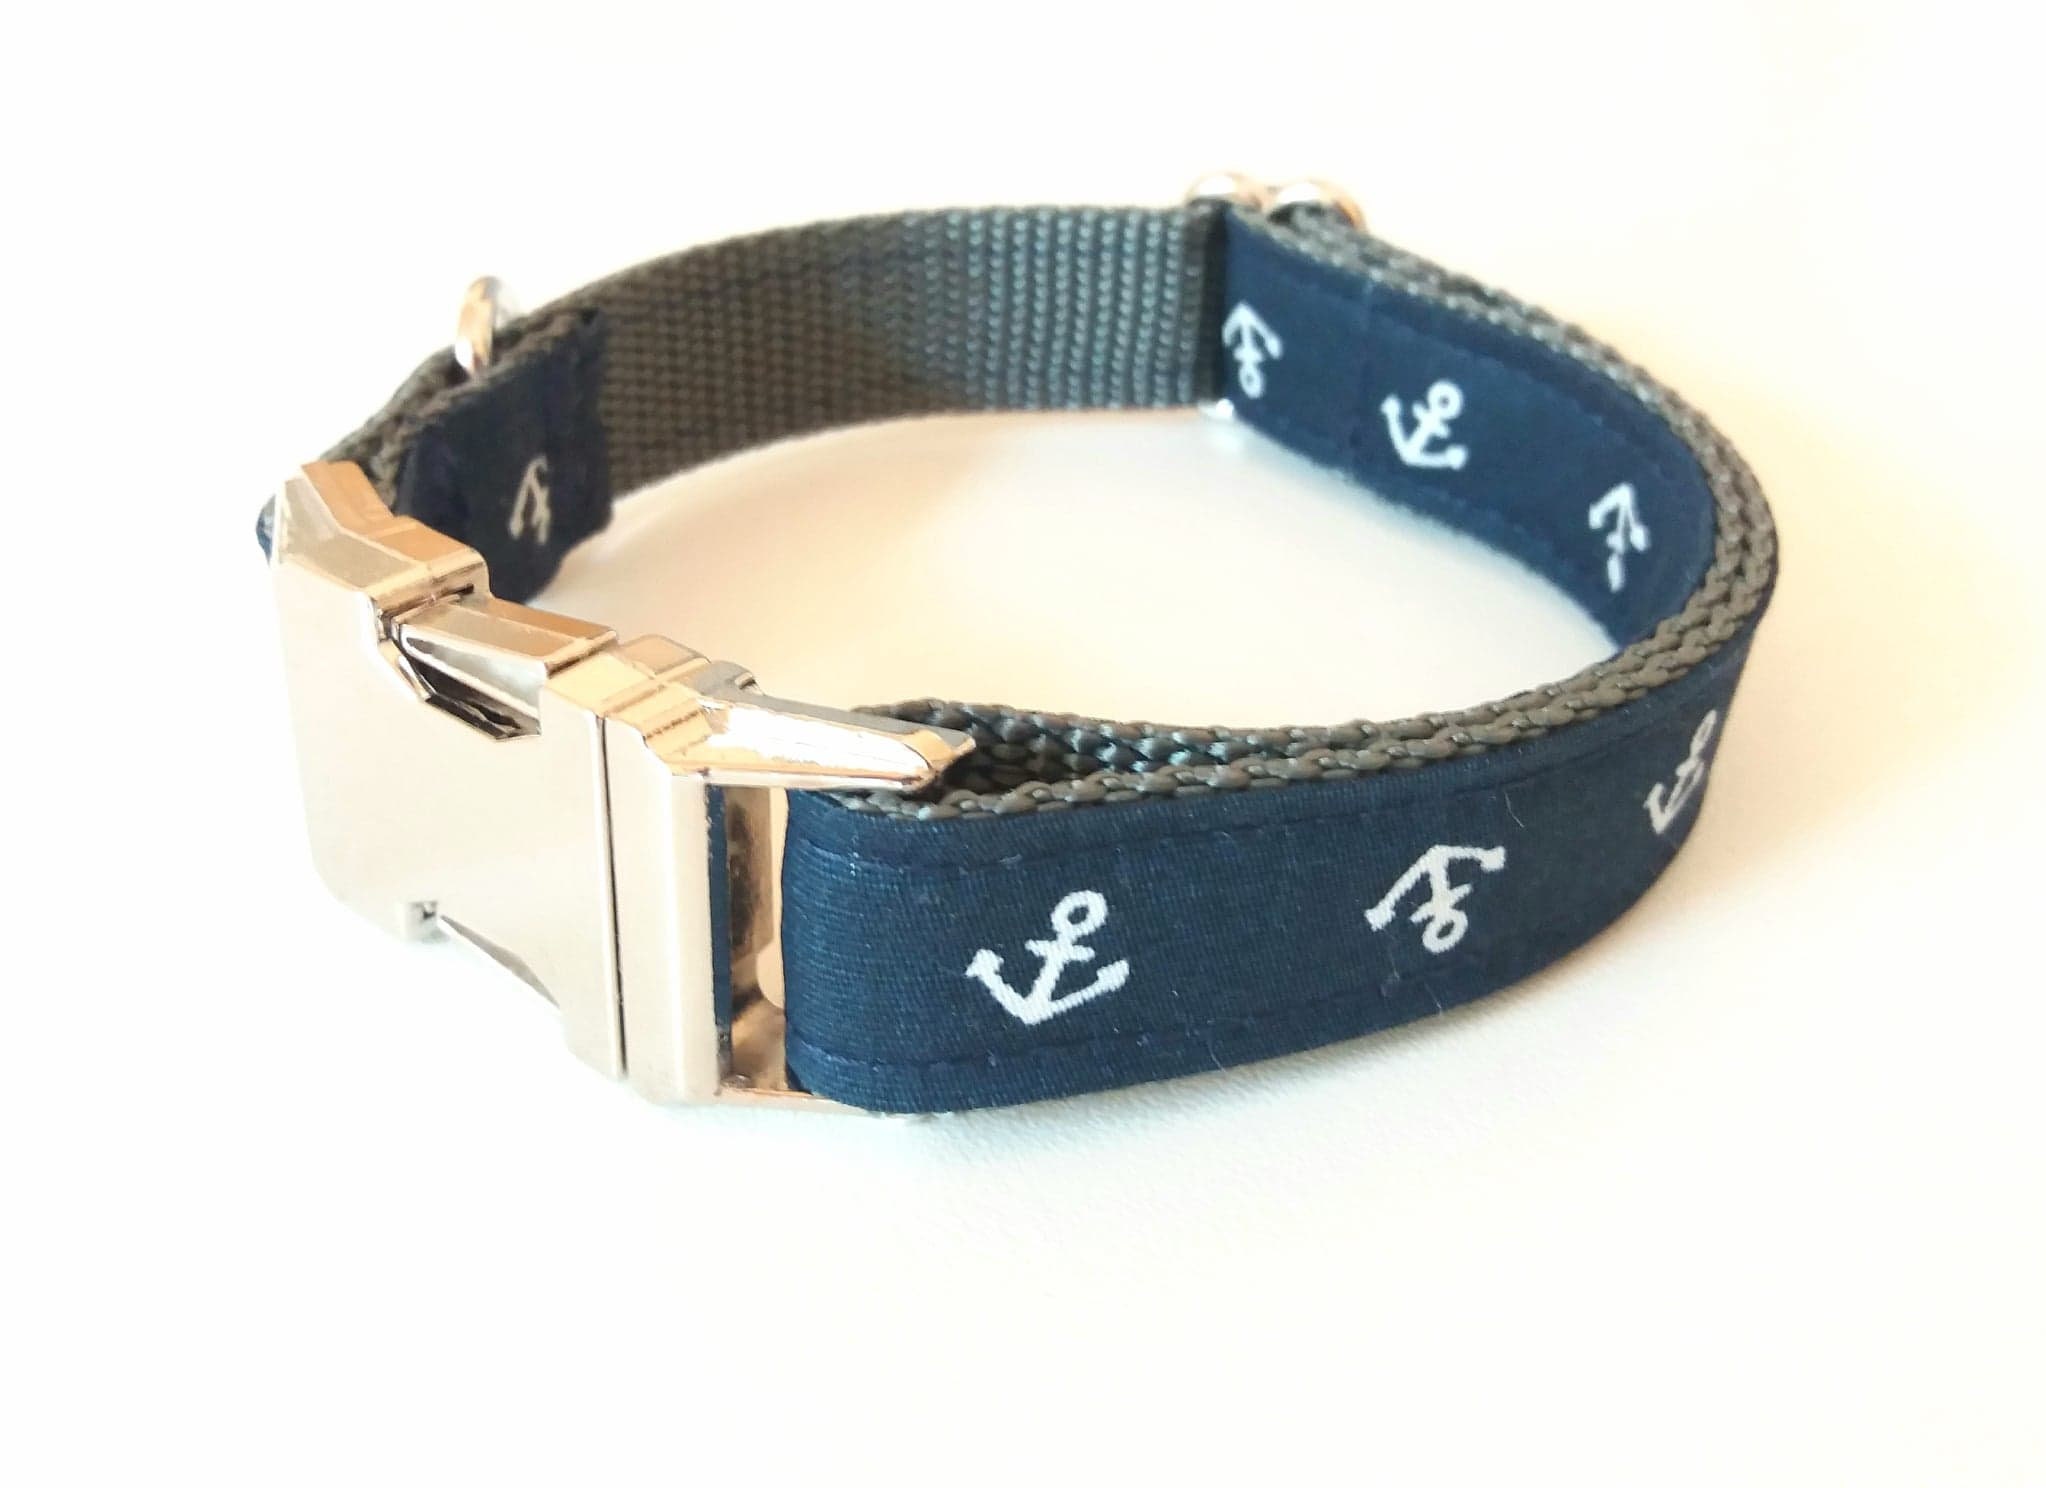 Collier Ancre Marine/Collier Pour Chien Nautical Style Marin Création Artisanale Bleu Marine /